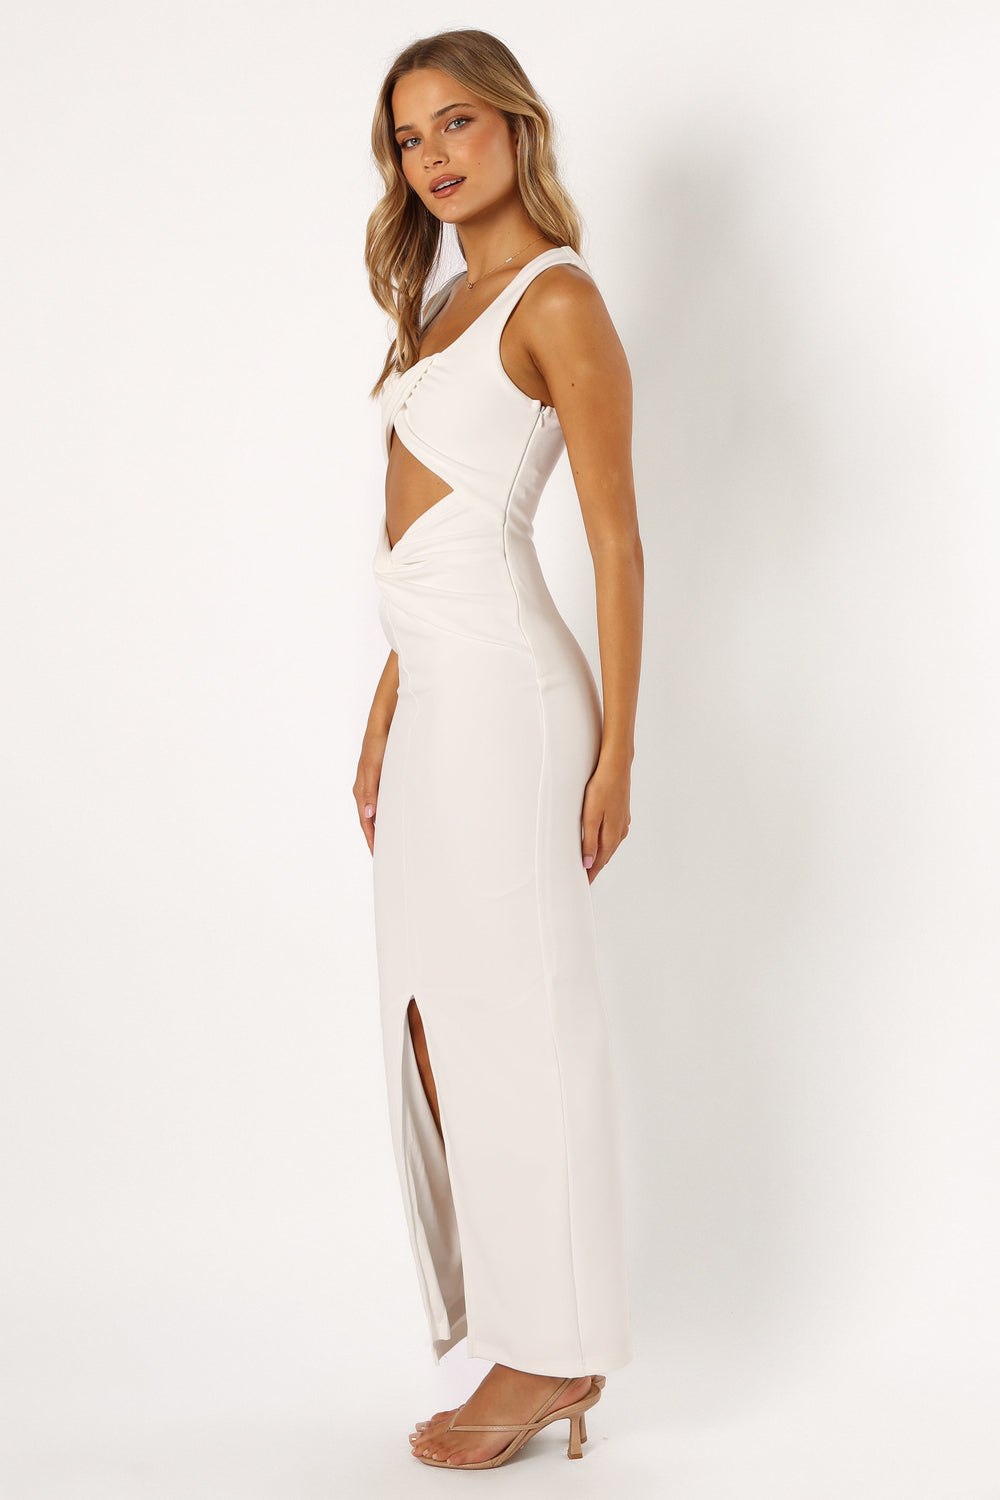 Shop Formal Dress - Zariah Dress - White third image